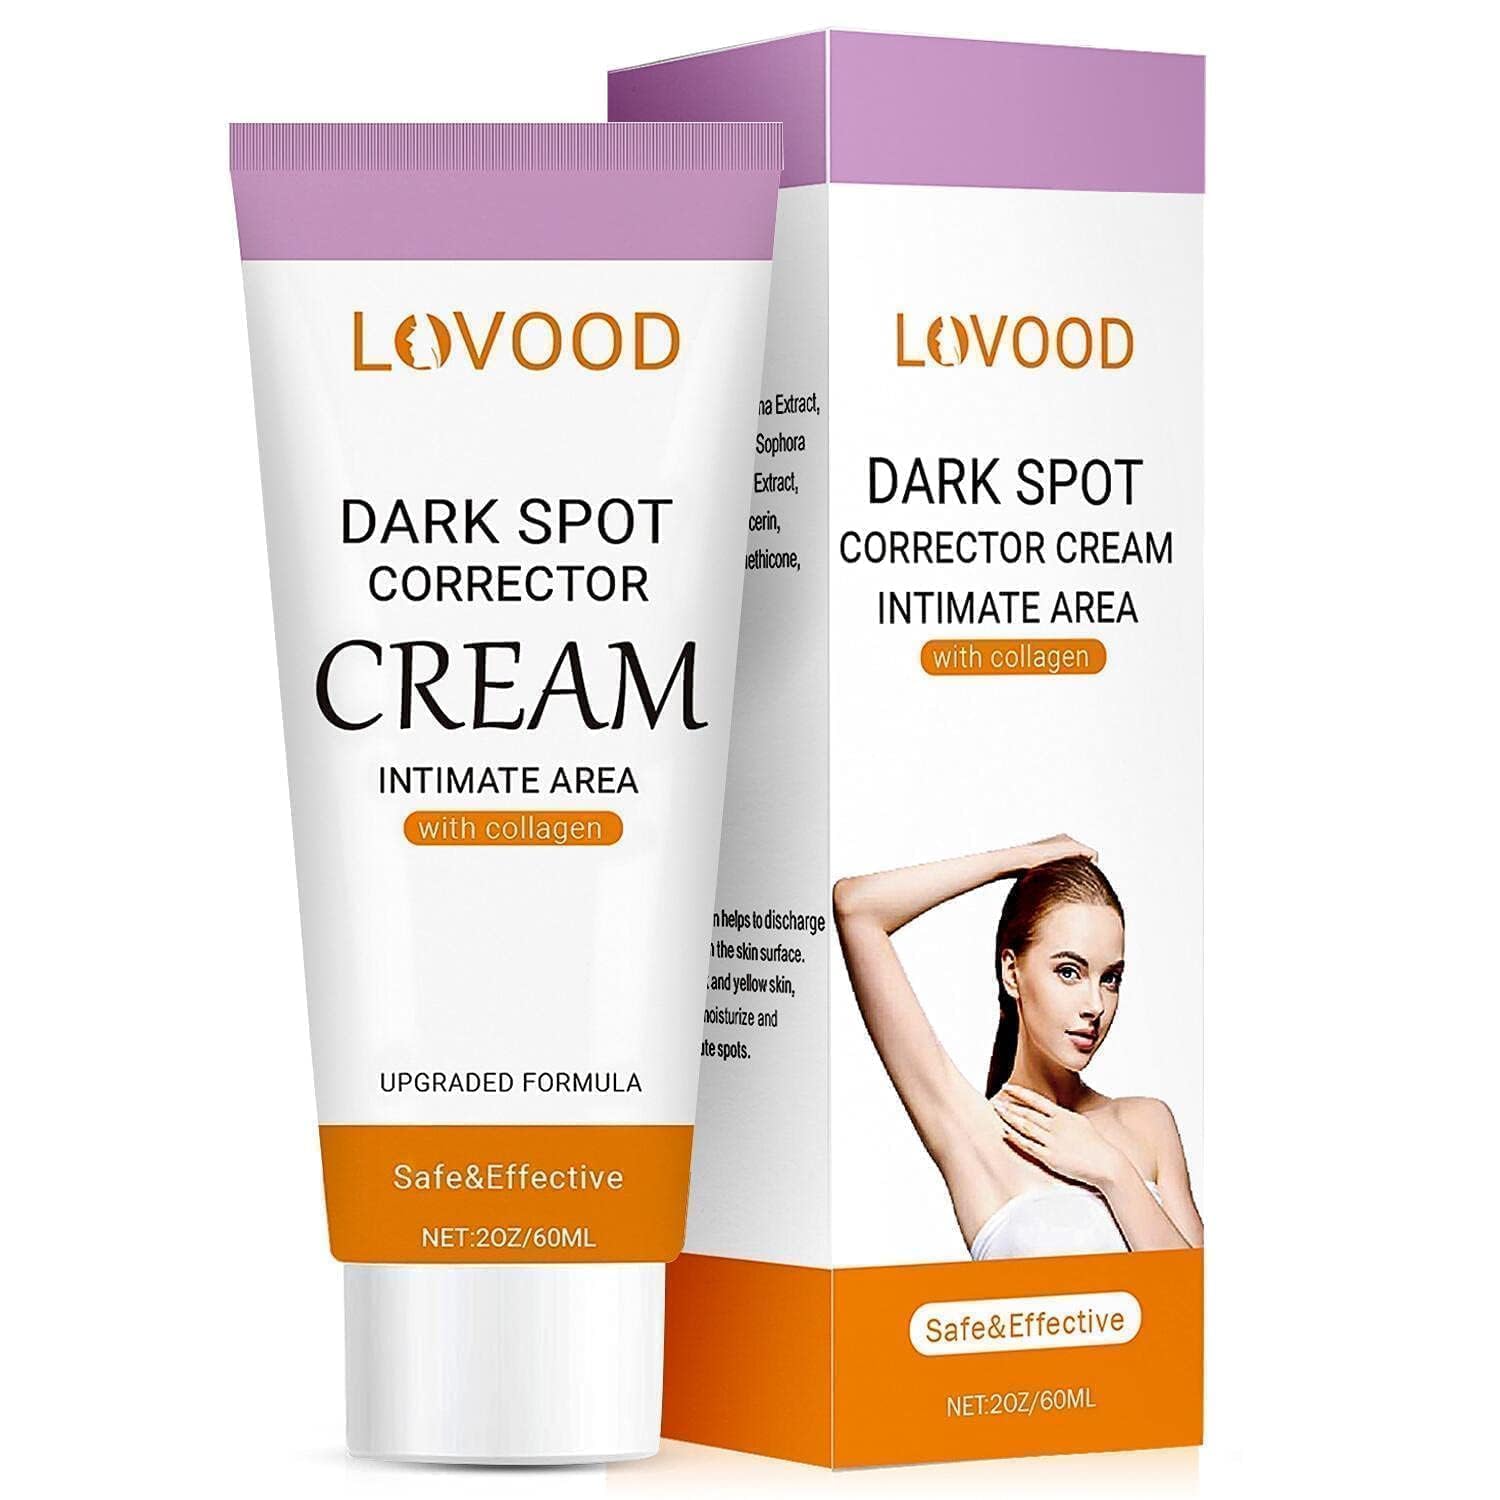 Dark Spot Corrector Cream de Lovood